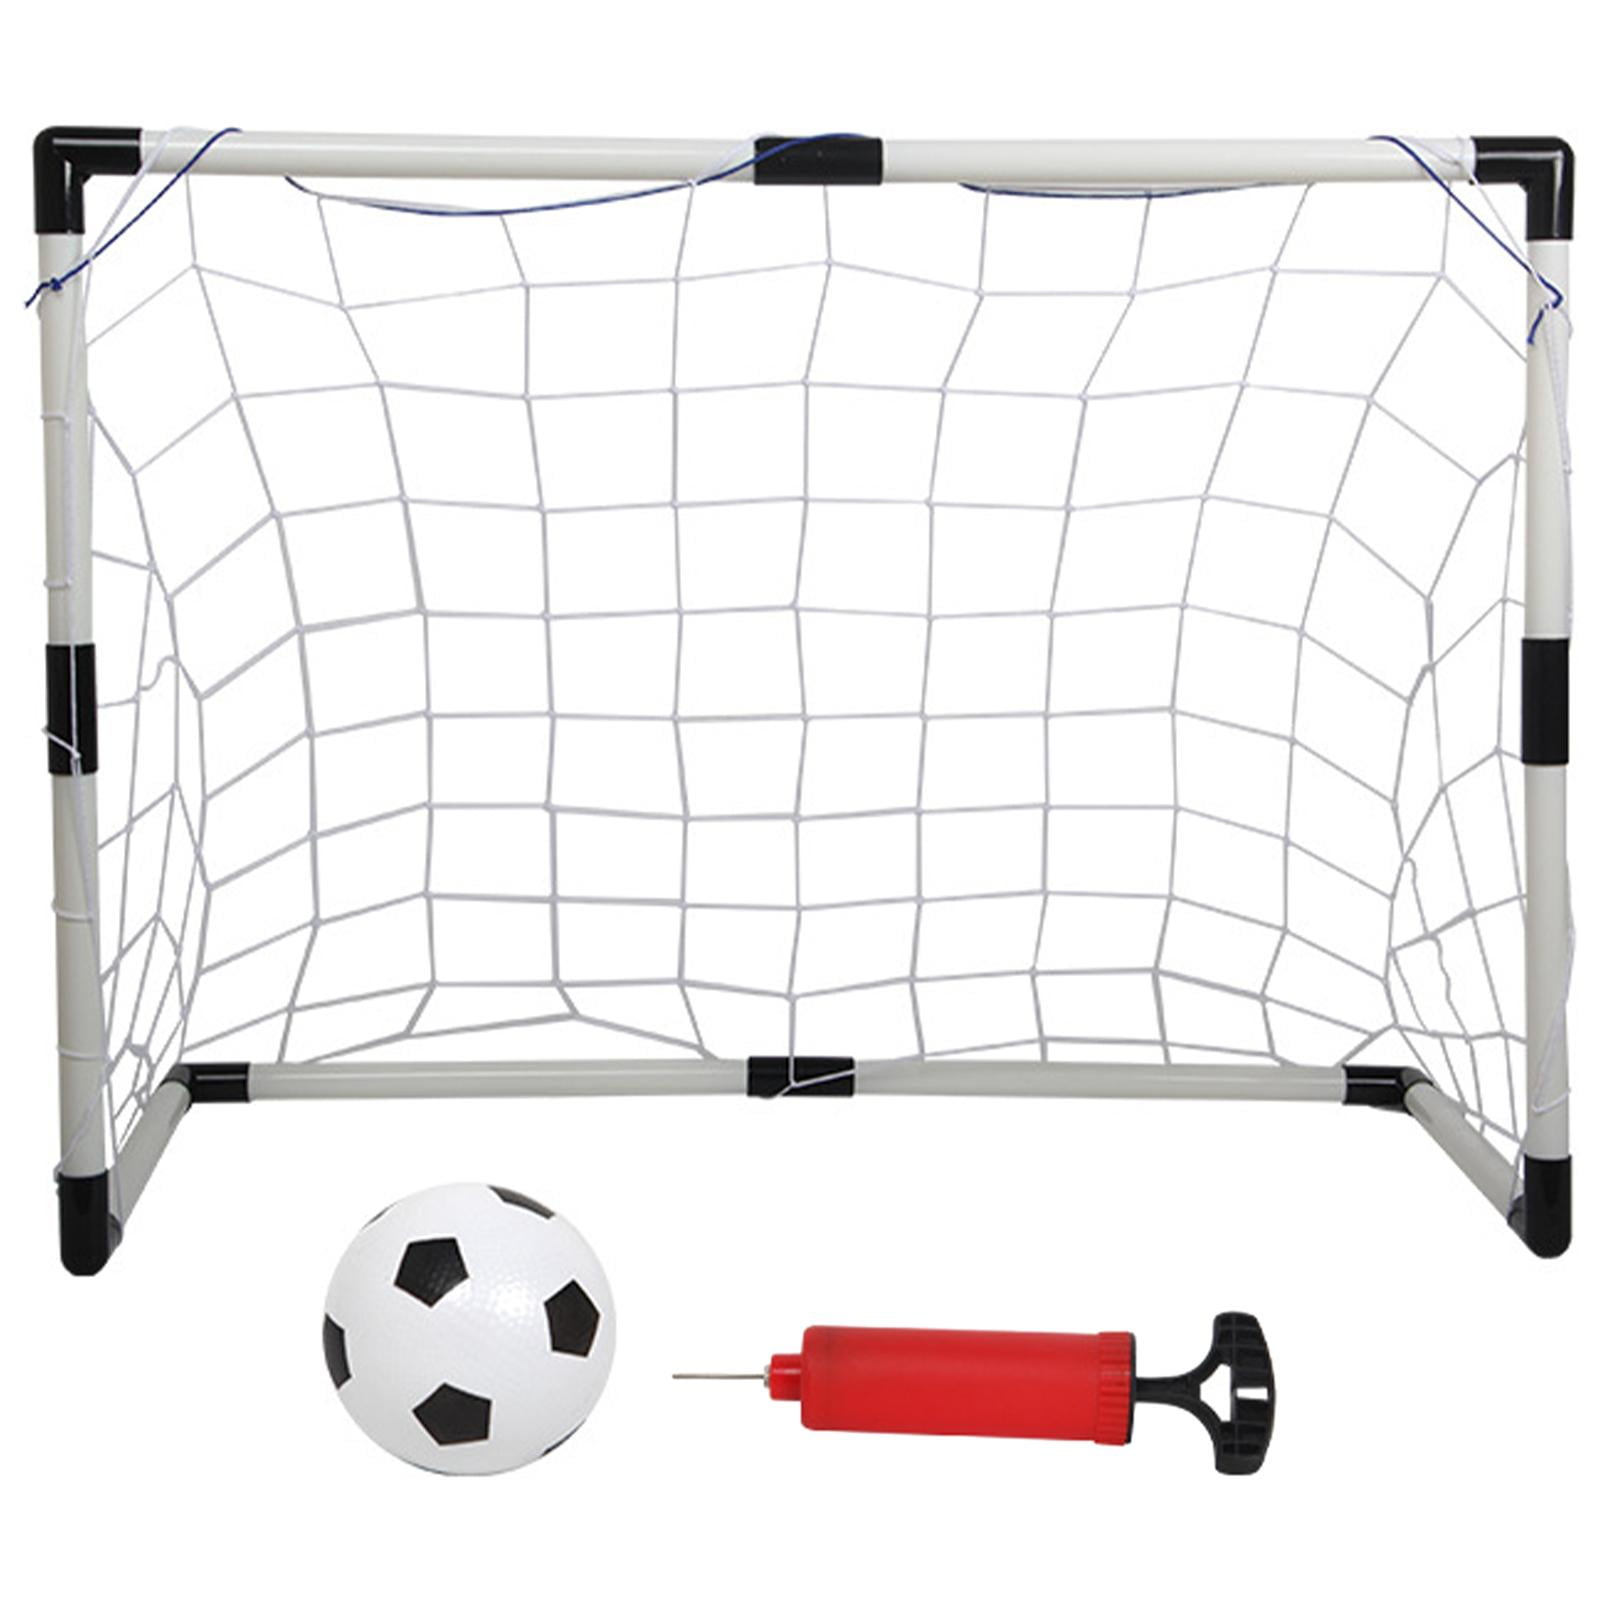 1pc 4ft Football Soccer Goal Post Net For Kids Outdoor Football Match Training_7 